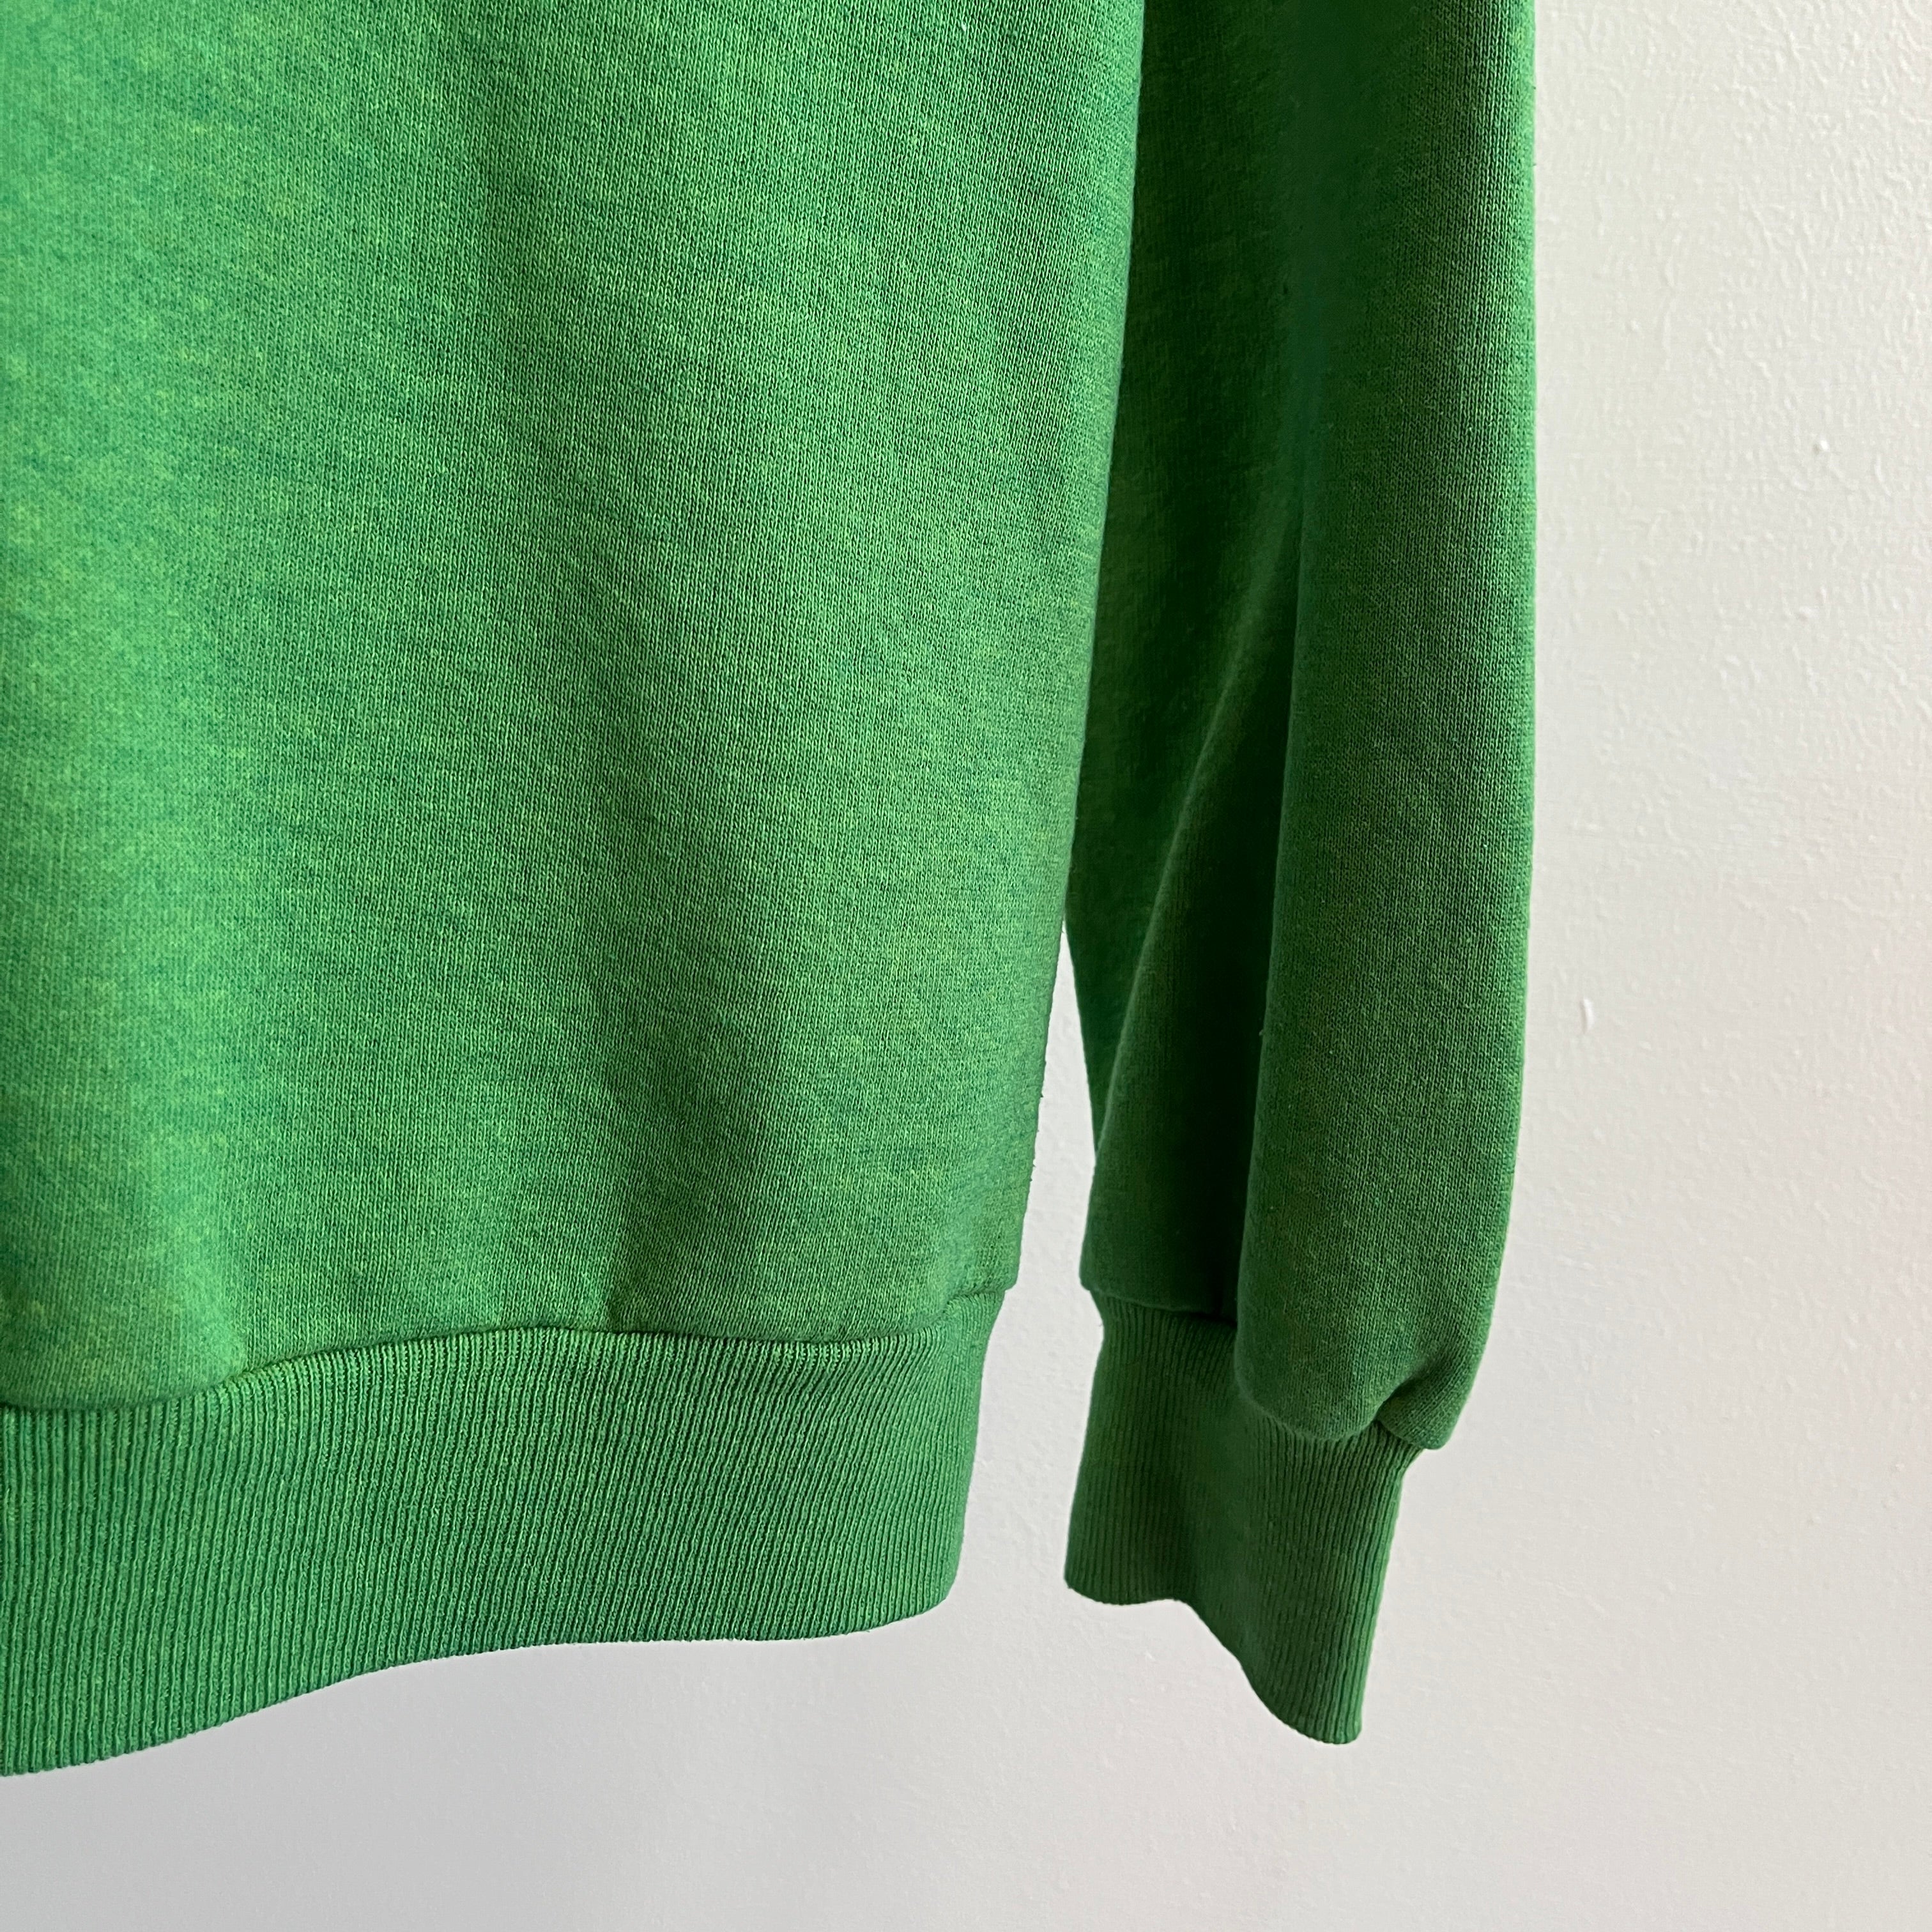 1980s Lime Green Jerzees Sweatshirt - Great Color!